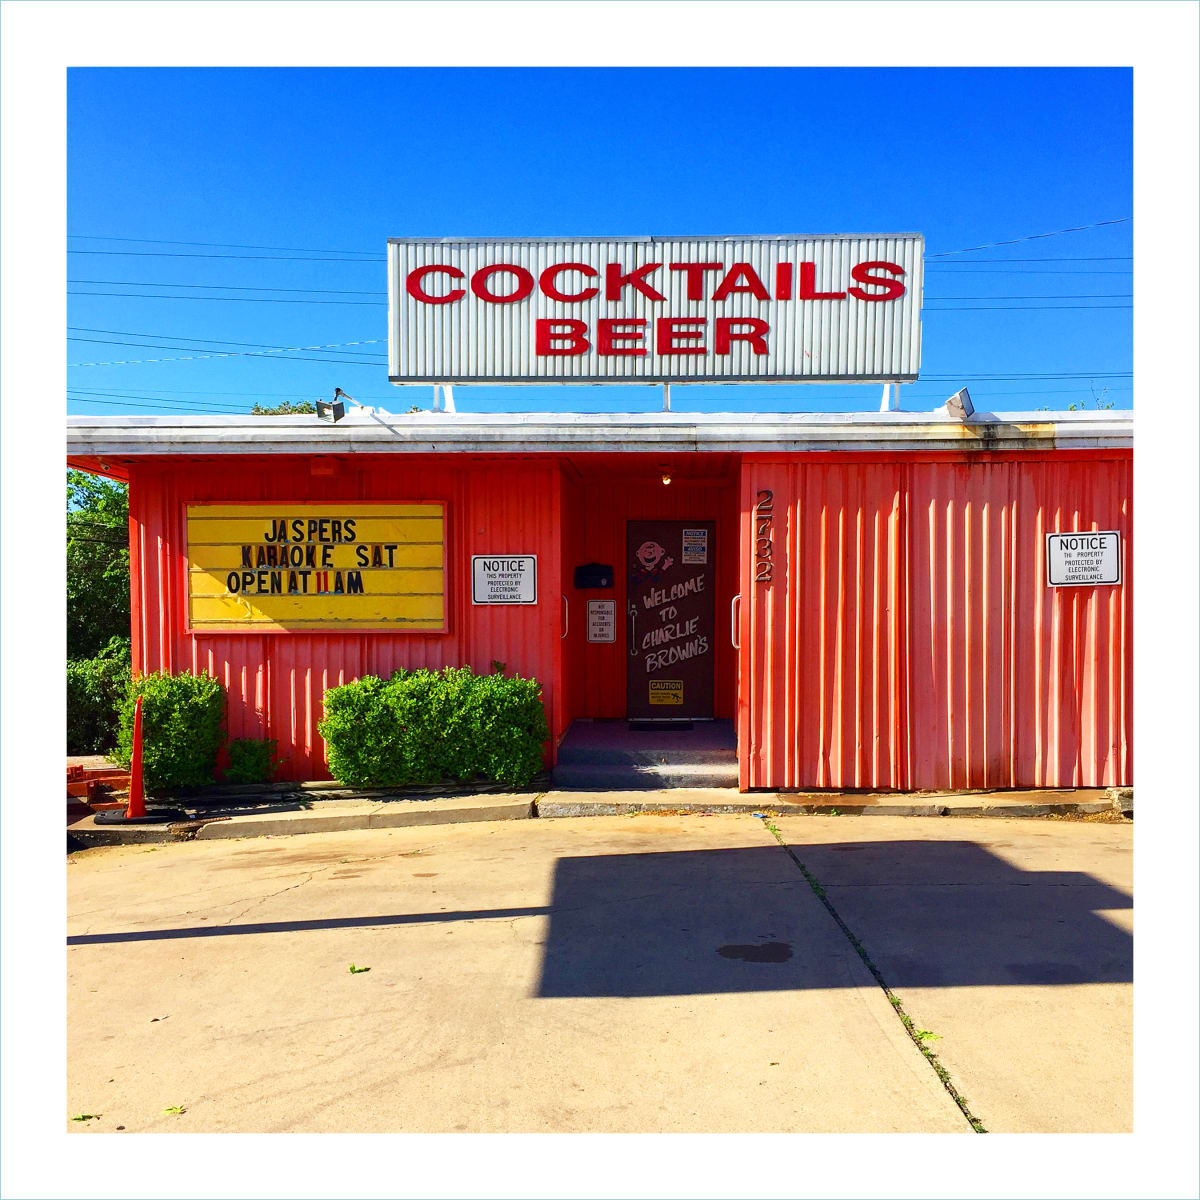 Cocktails Beer, Fort Worth TX, 2018